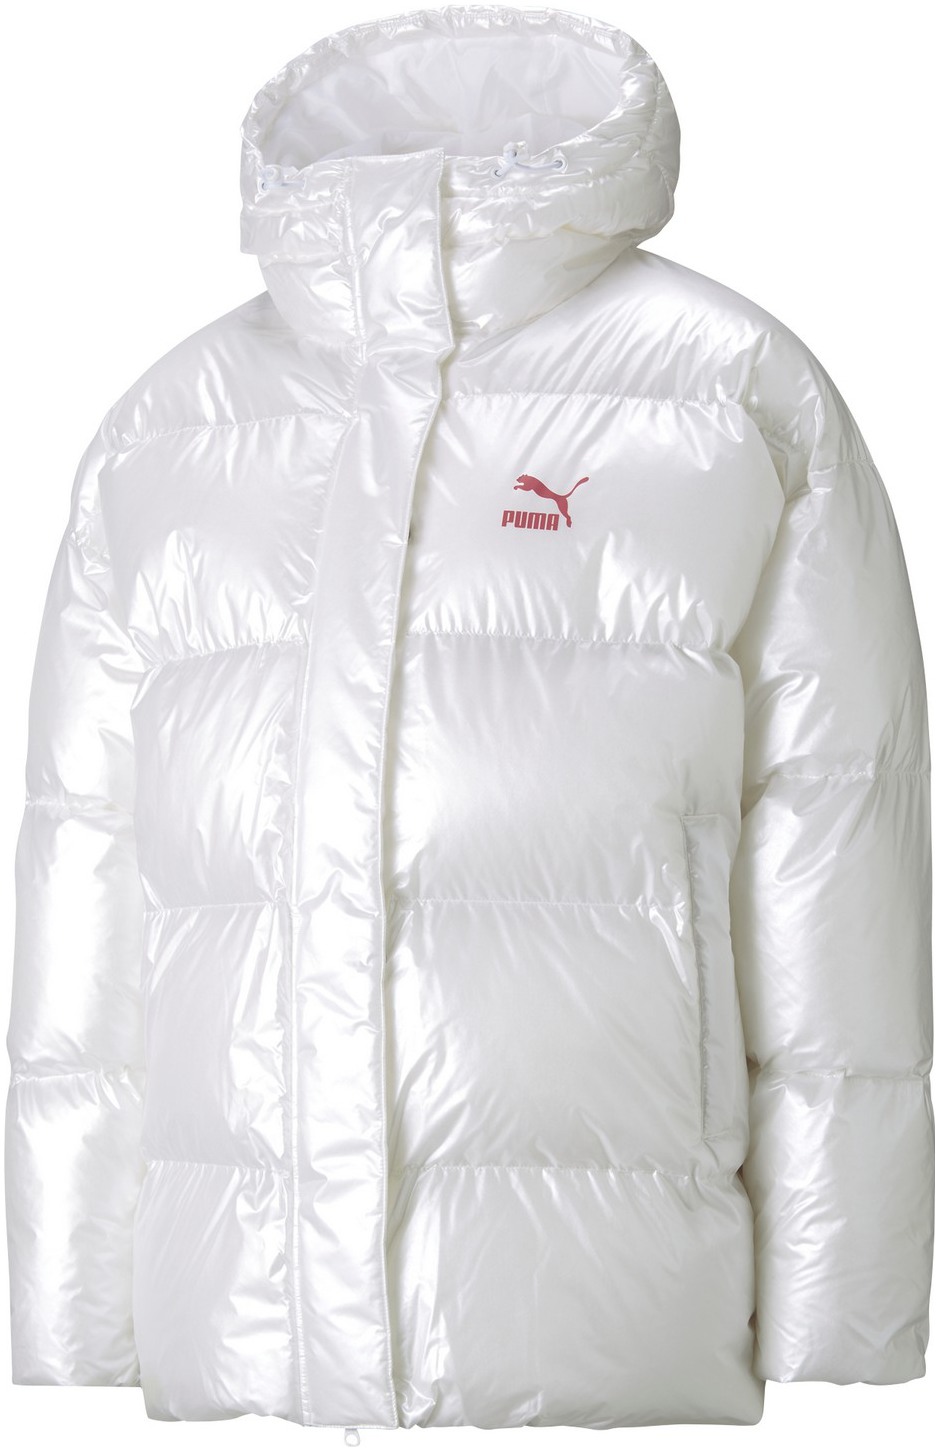 Womens winter jacket Puma CLASSICS OVERSIZED W JACKET white AD 